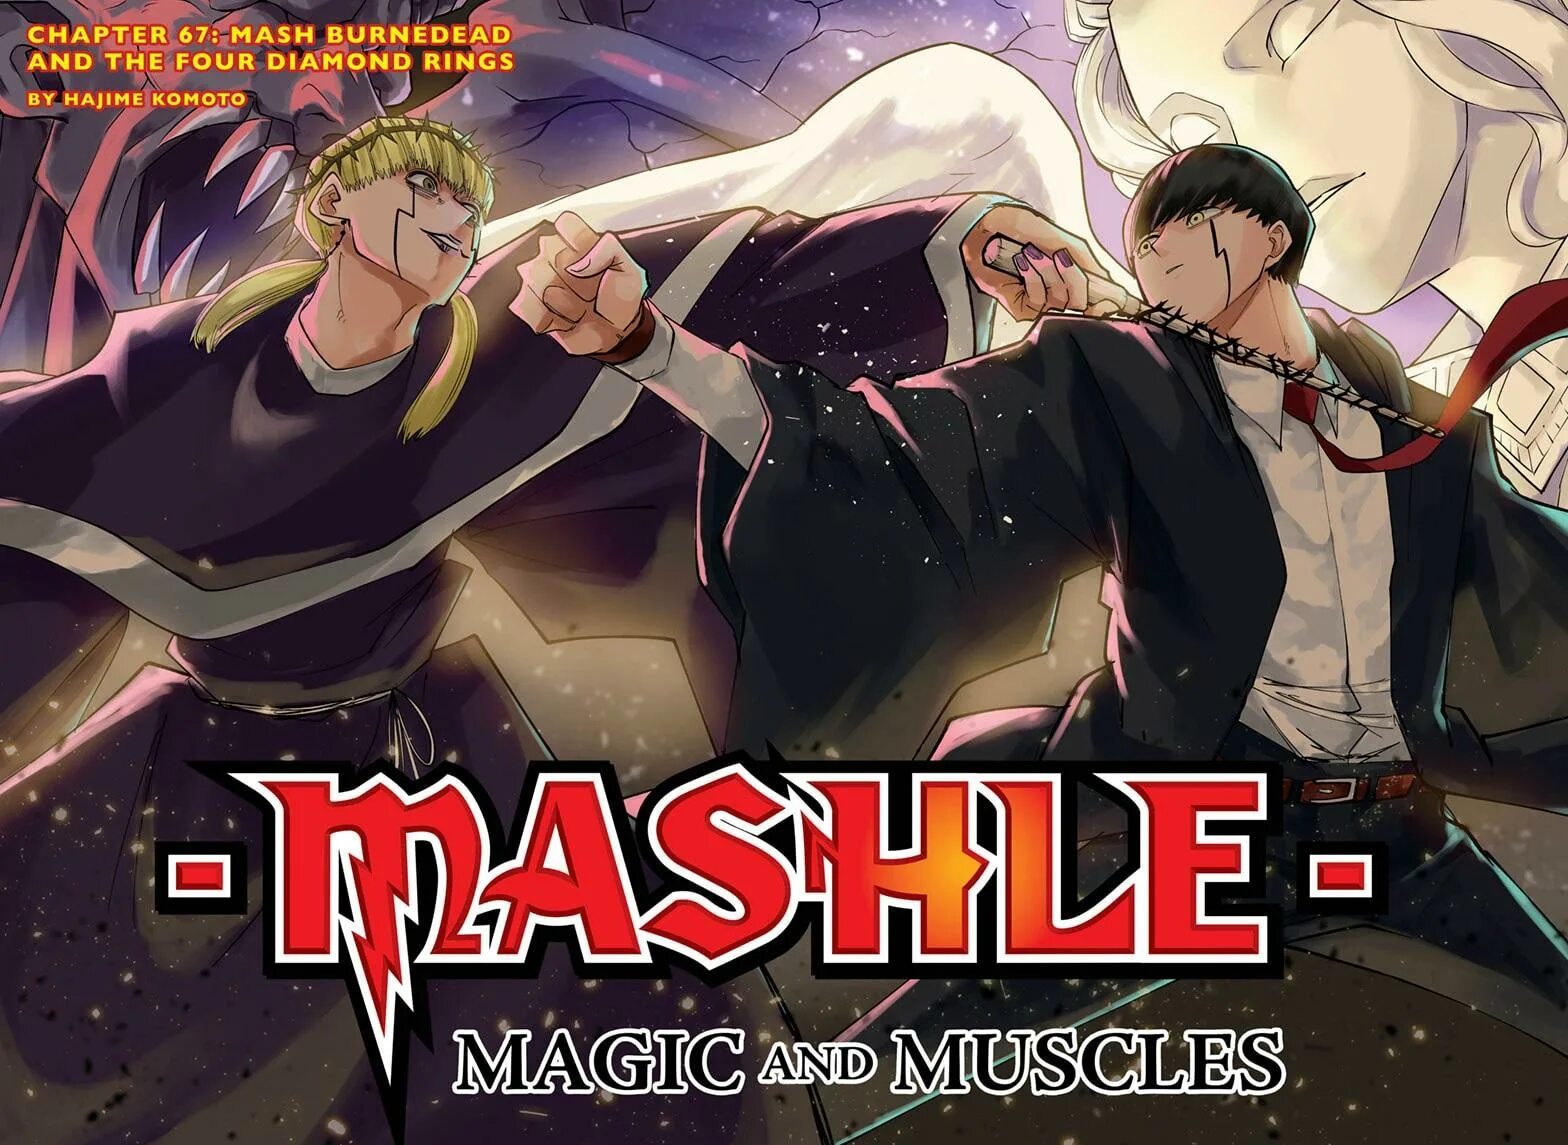 Mashle Burnedead. Mashle: Magic and muscles. Магия и мускулы Манга.